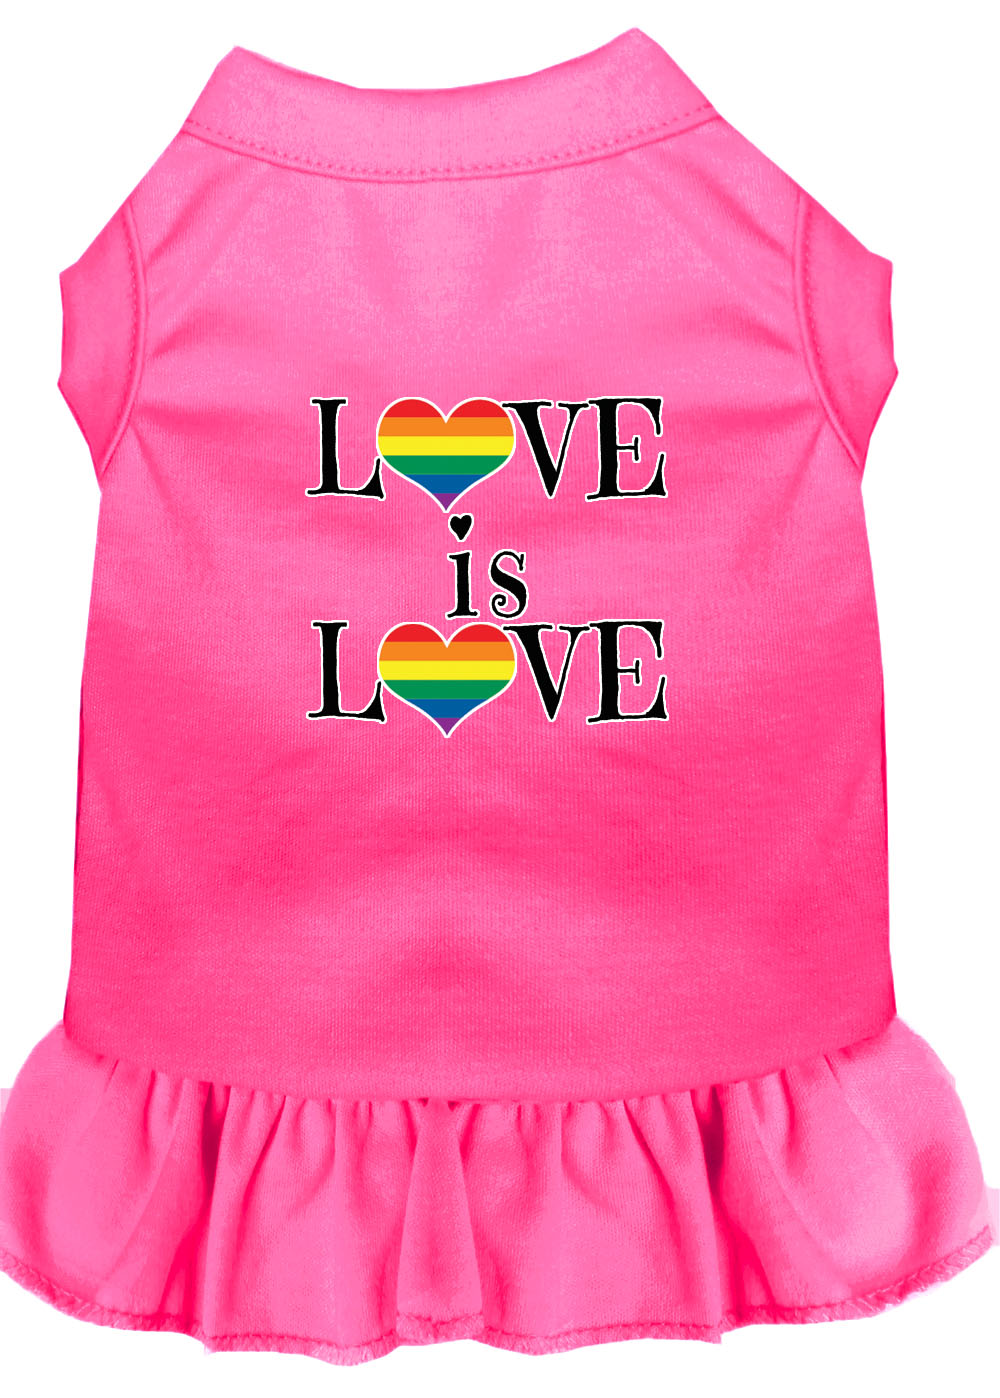 Love is Love Screen Print Dog Dress Bright Pink XS